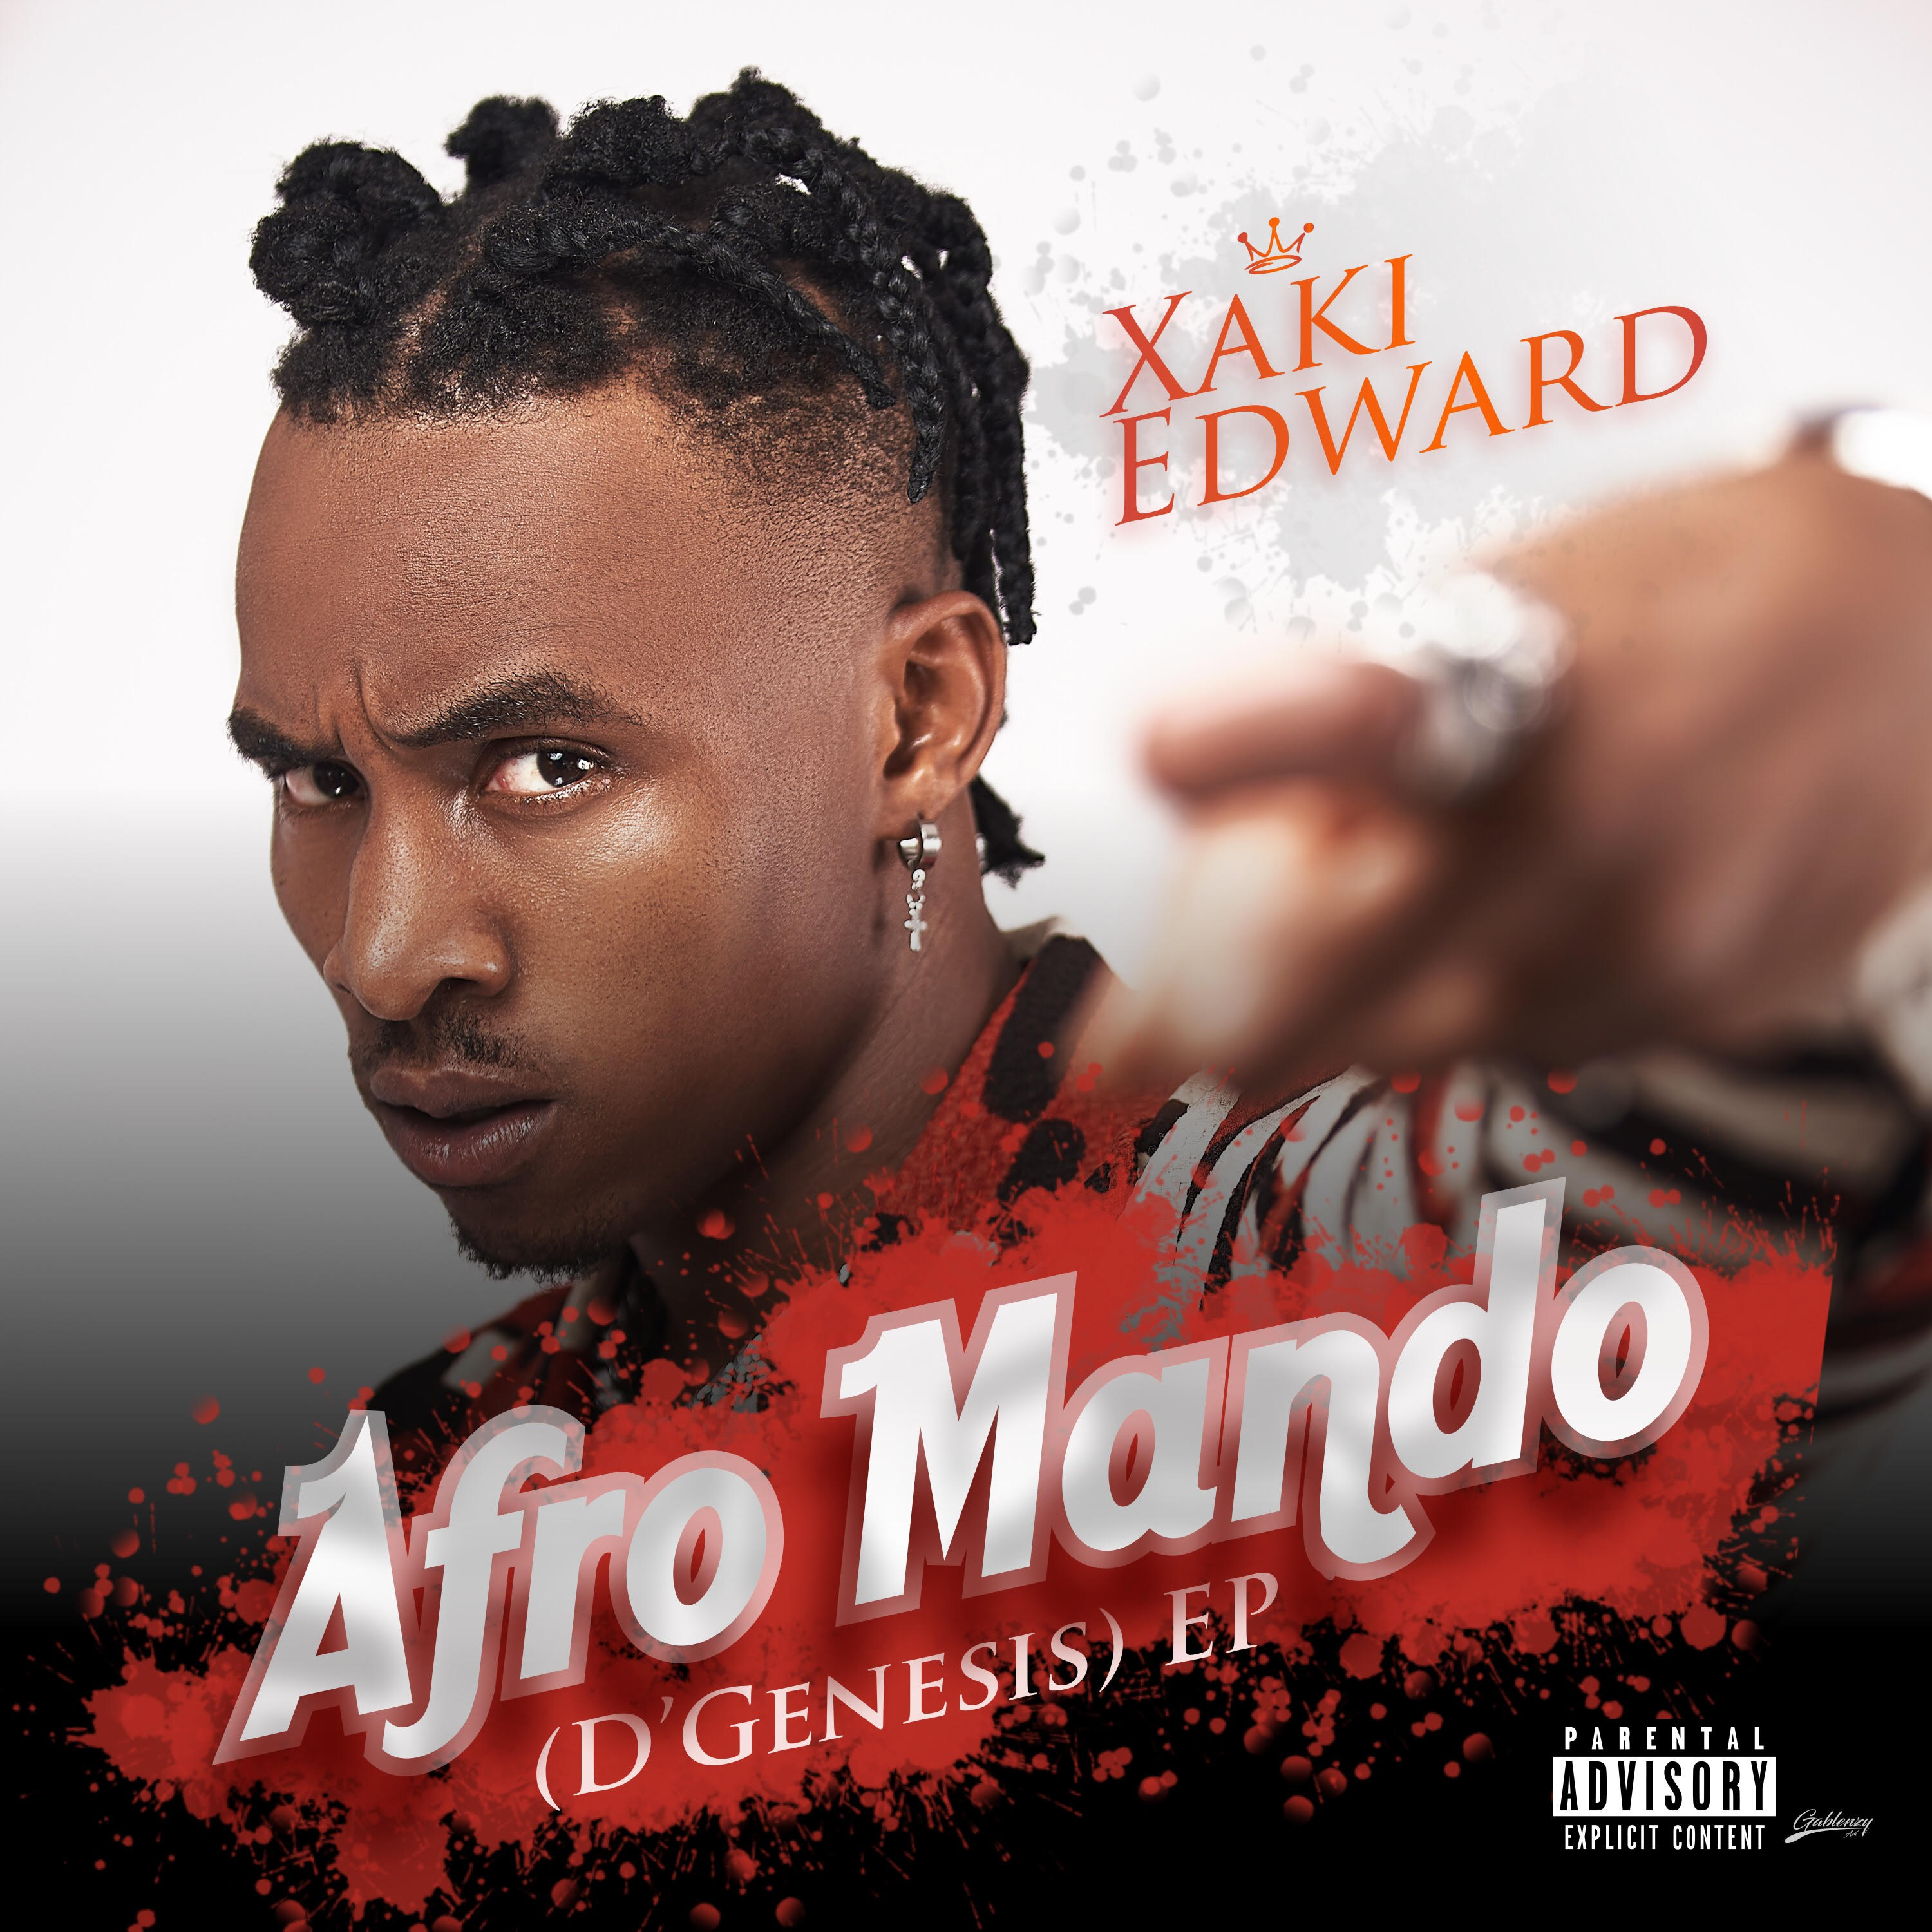 XAKI EDWARD serves us with AFROMANDO (D’Genesis) EP | Stream!